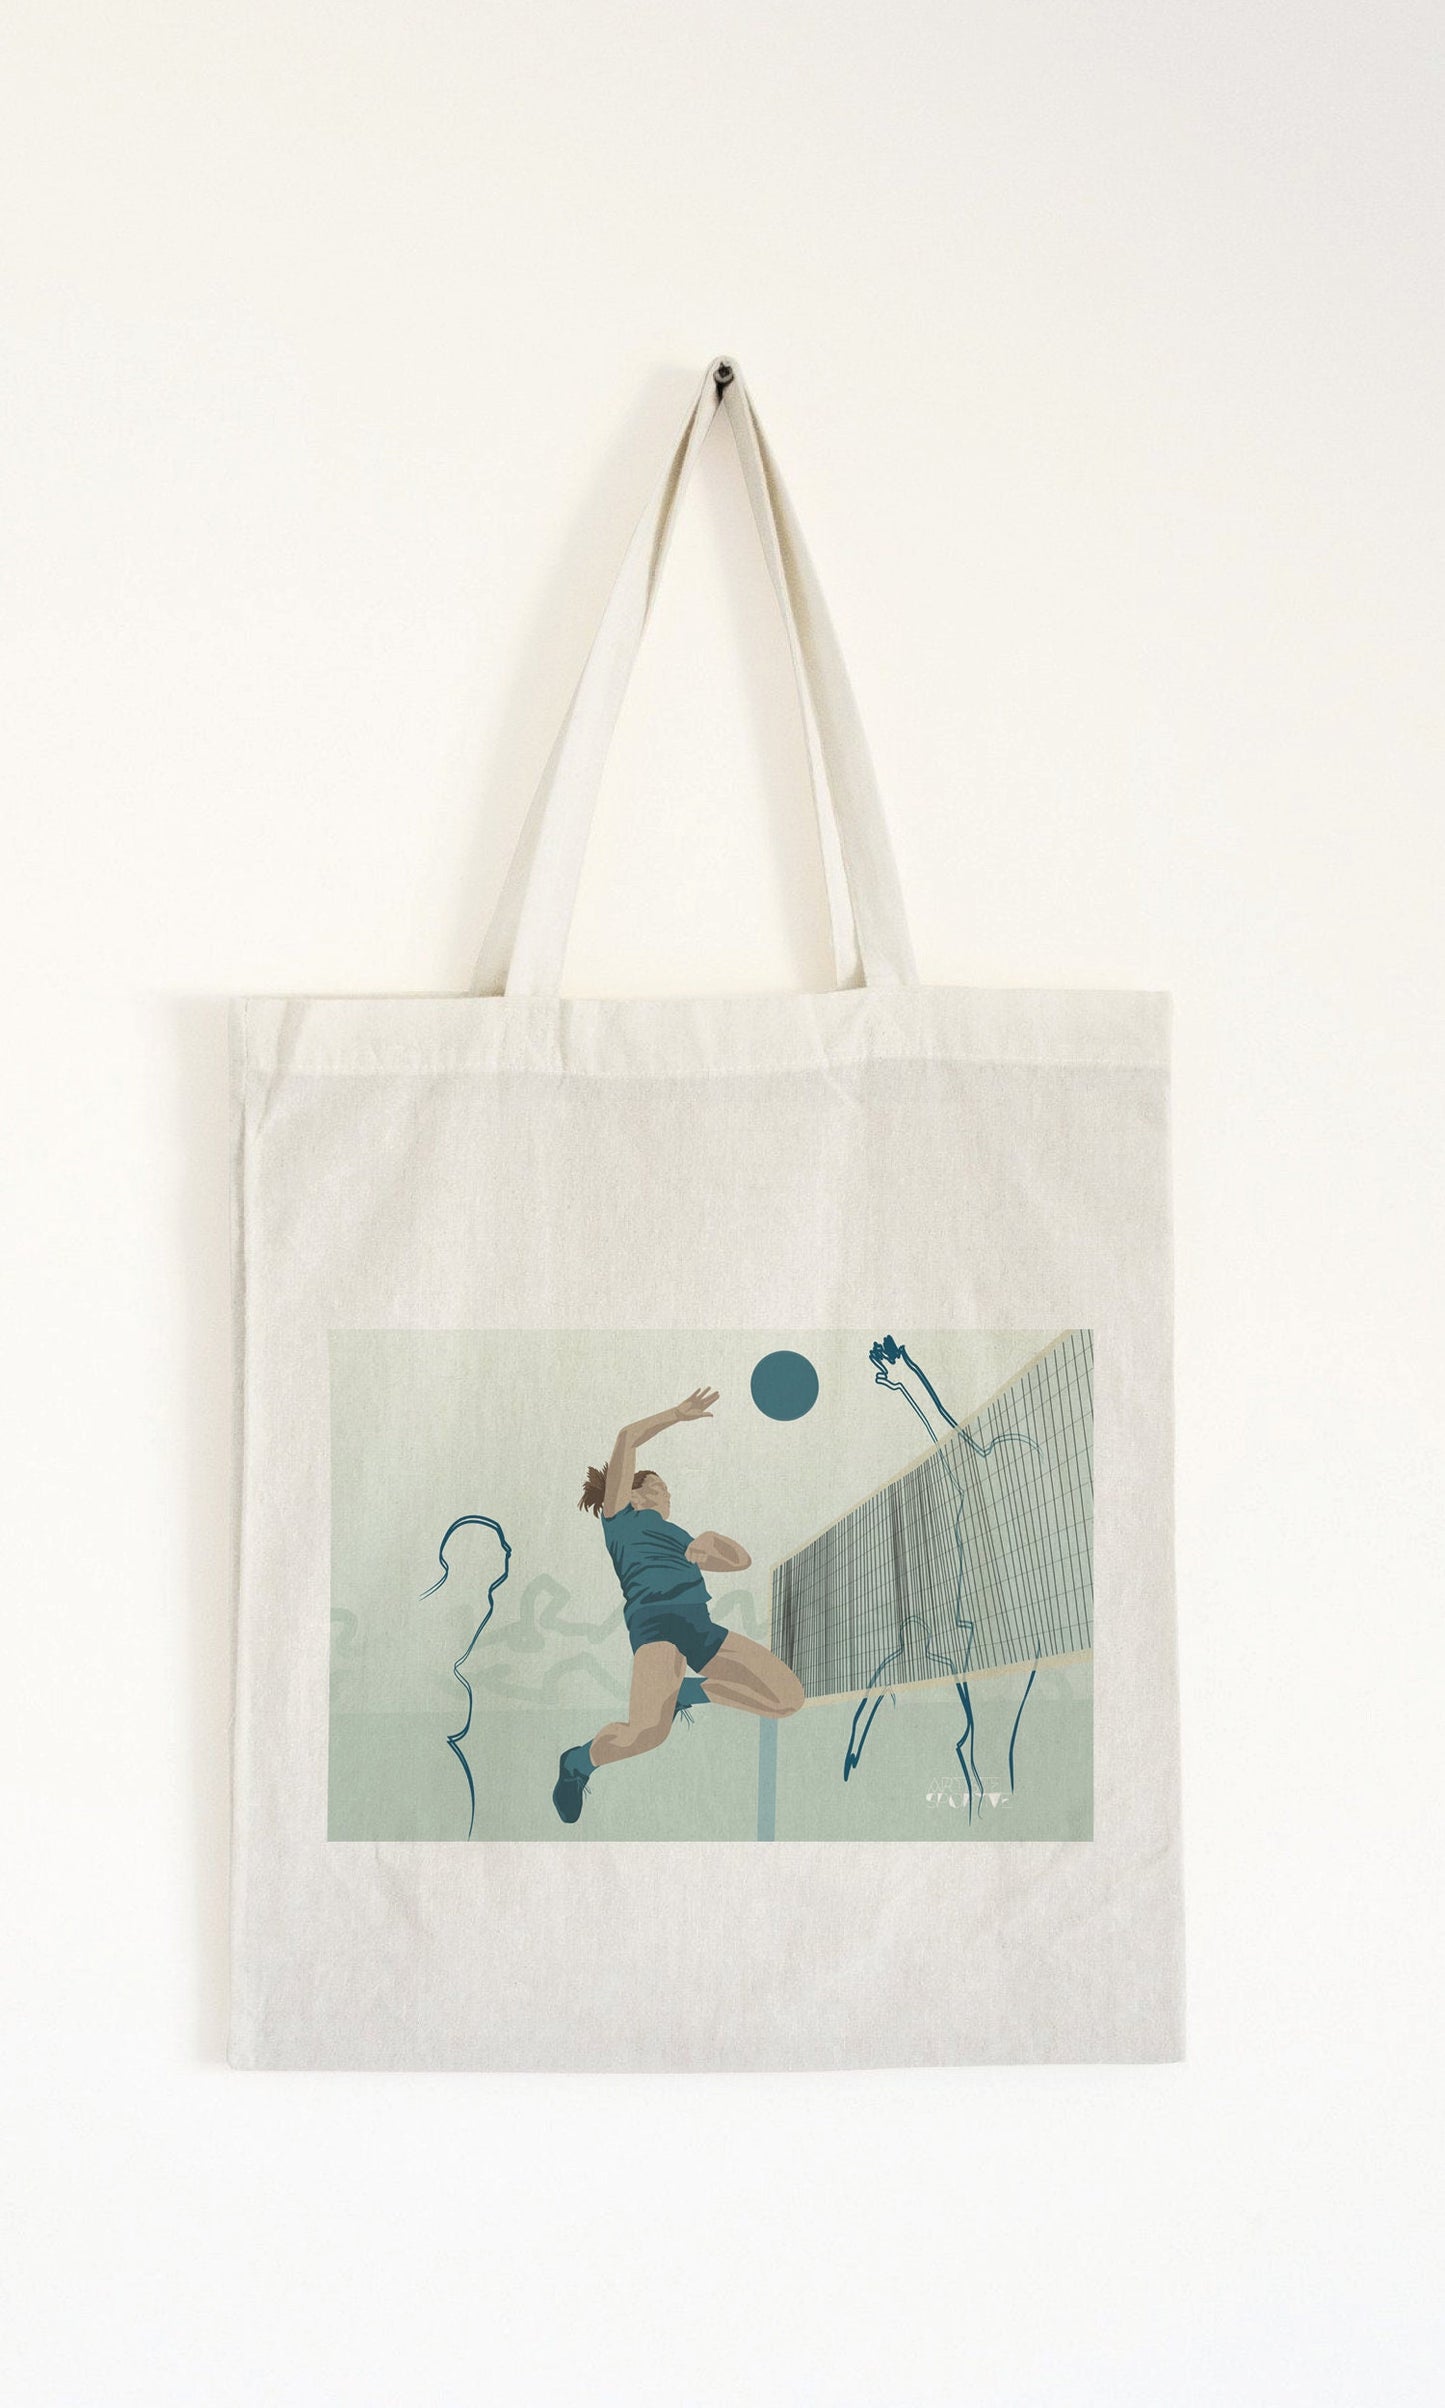 Tote bag ou sac "Volleyball féminin"